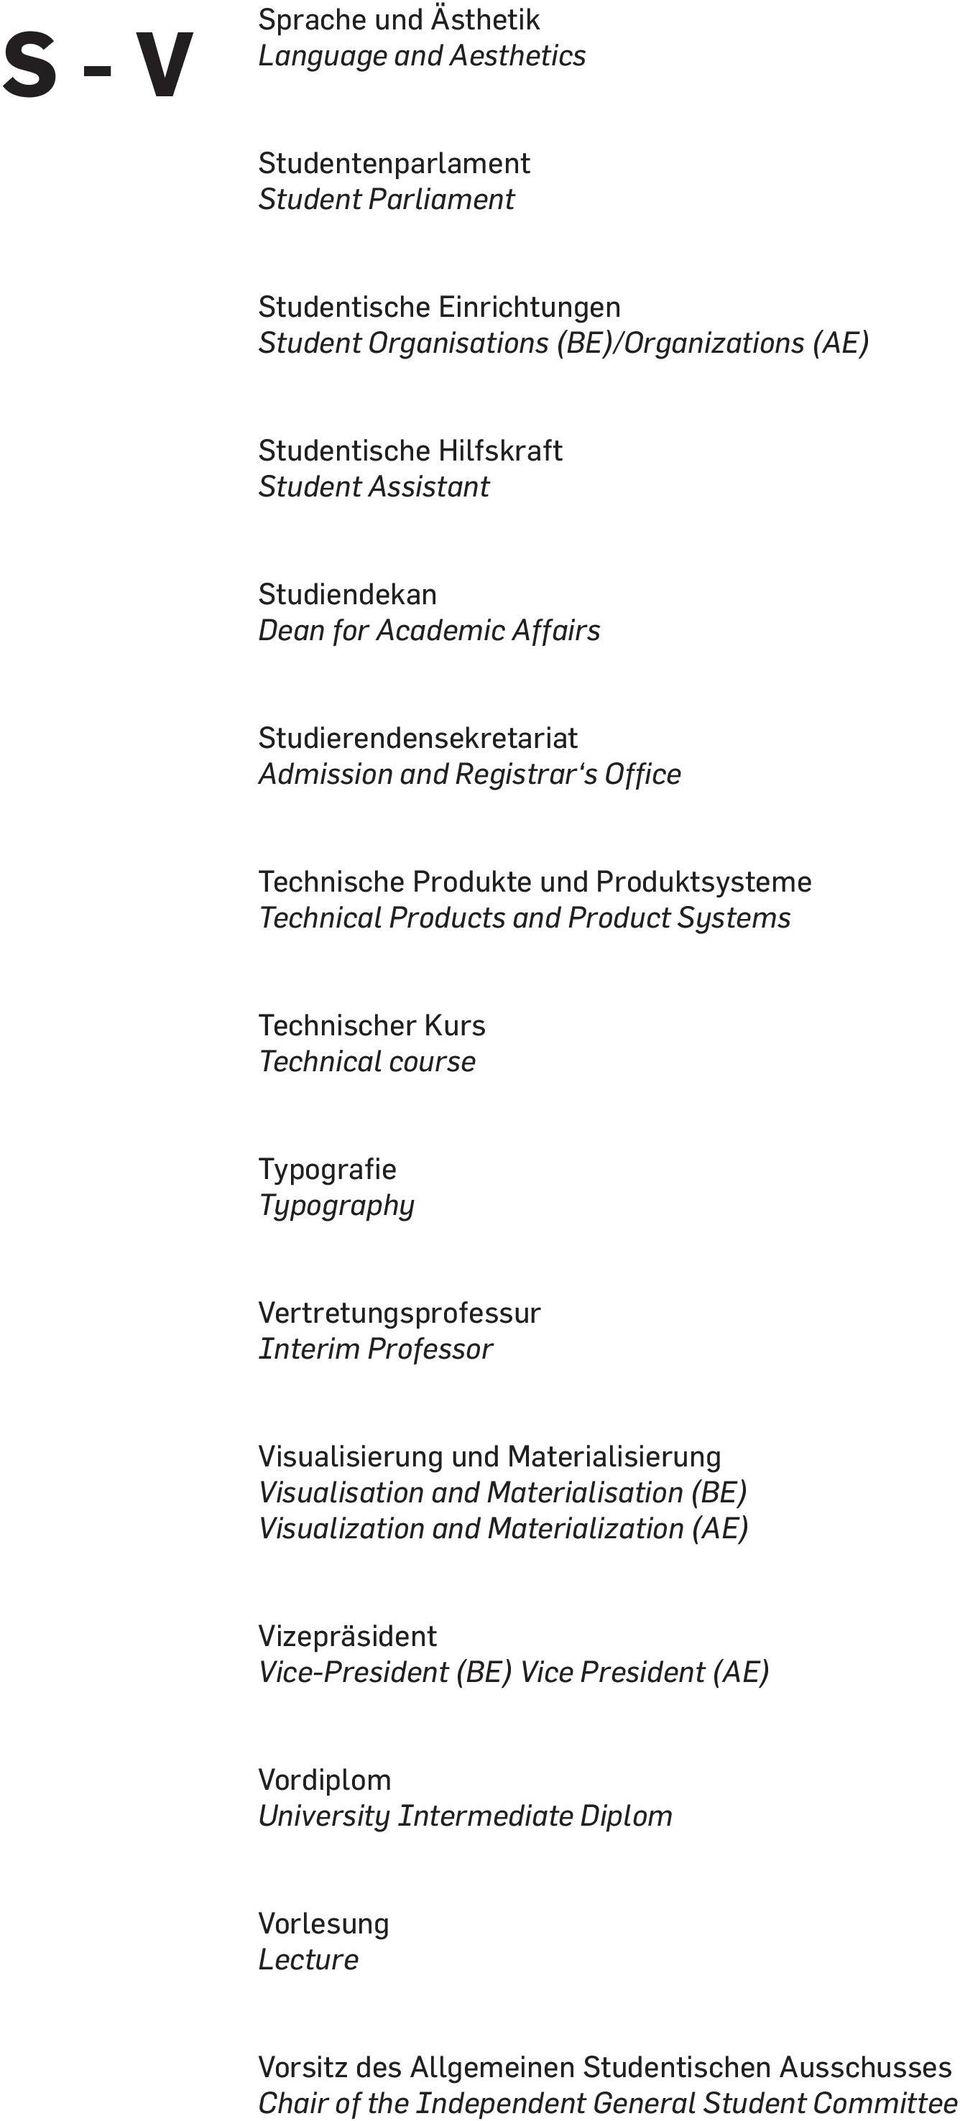 Kurs Technical course Typografie Typography Vertretungsprofessur Interim Professor Visualisierung und Materialisierung Visualisation and Materialisation (BE) Visualization and Materialization (AE)